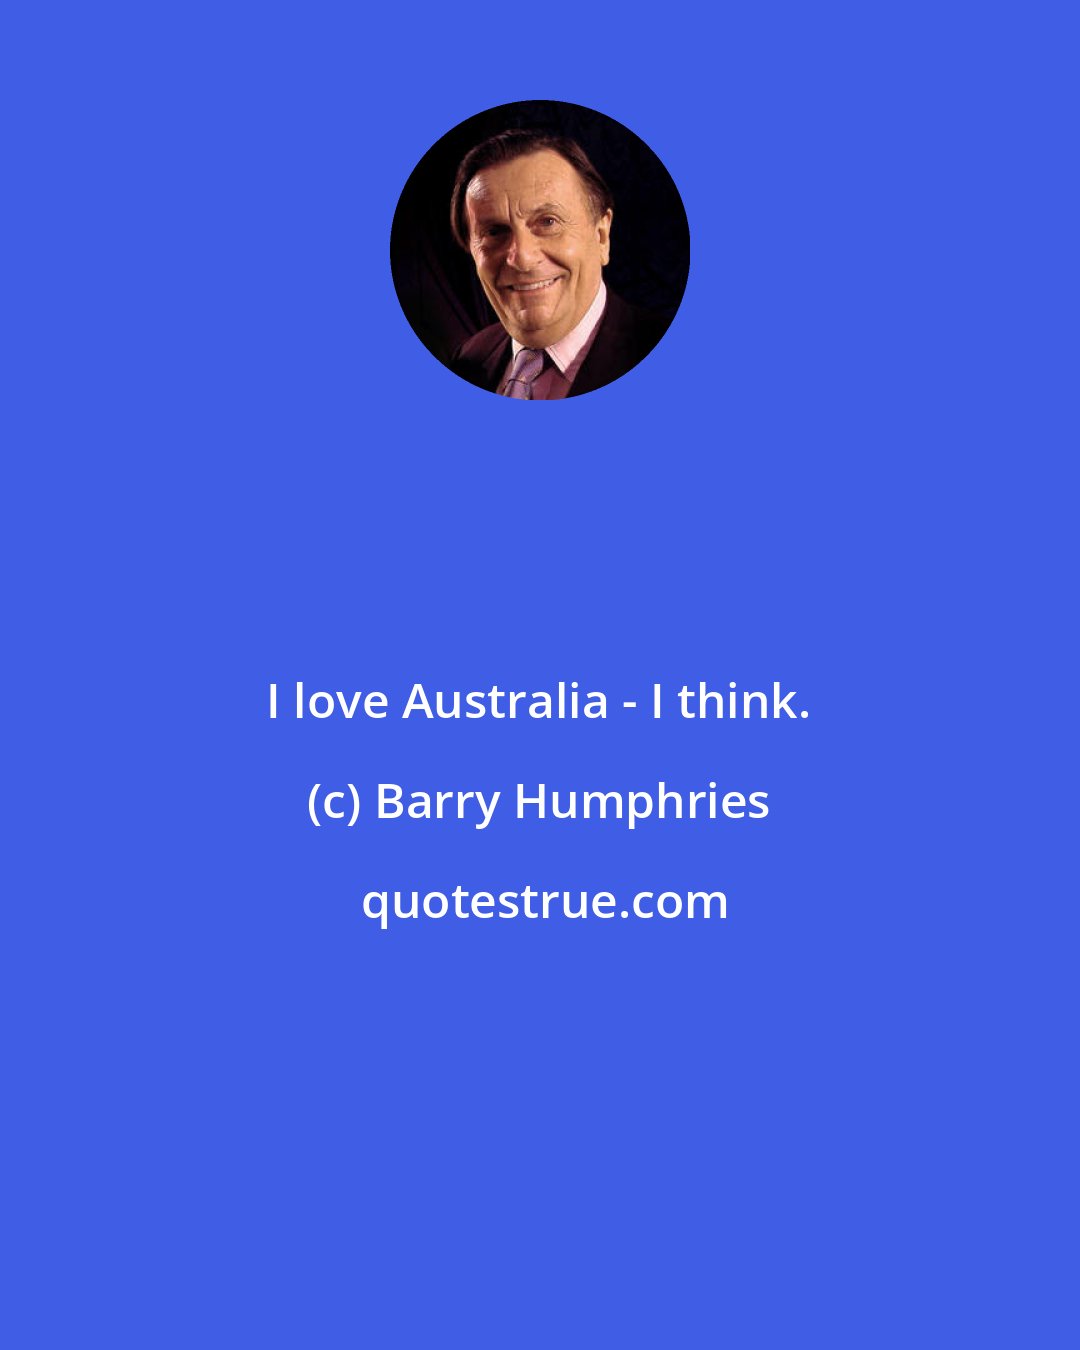 Barry Humphries: I love Australia - I think.